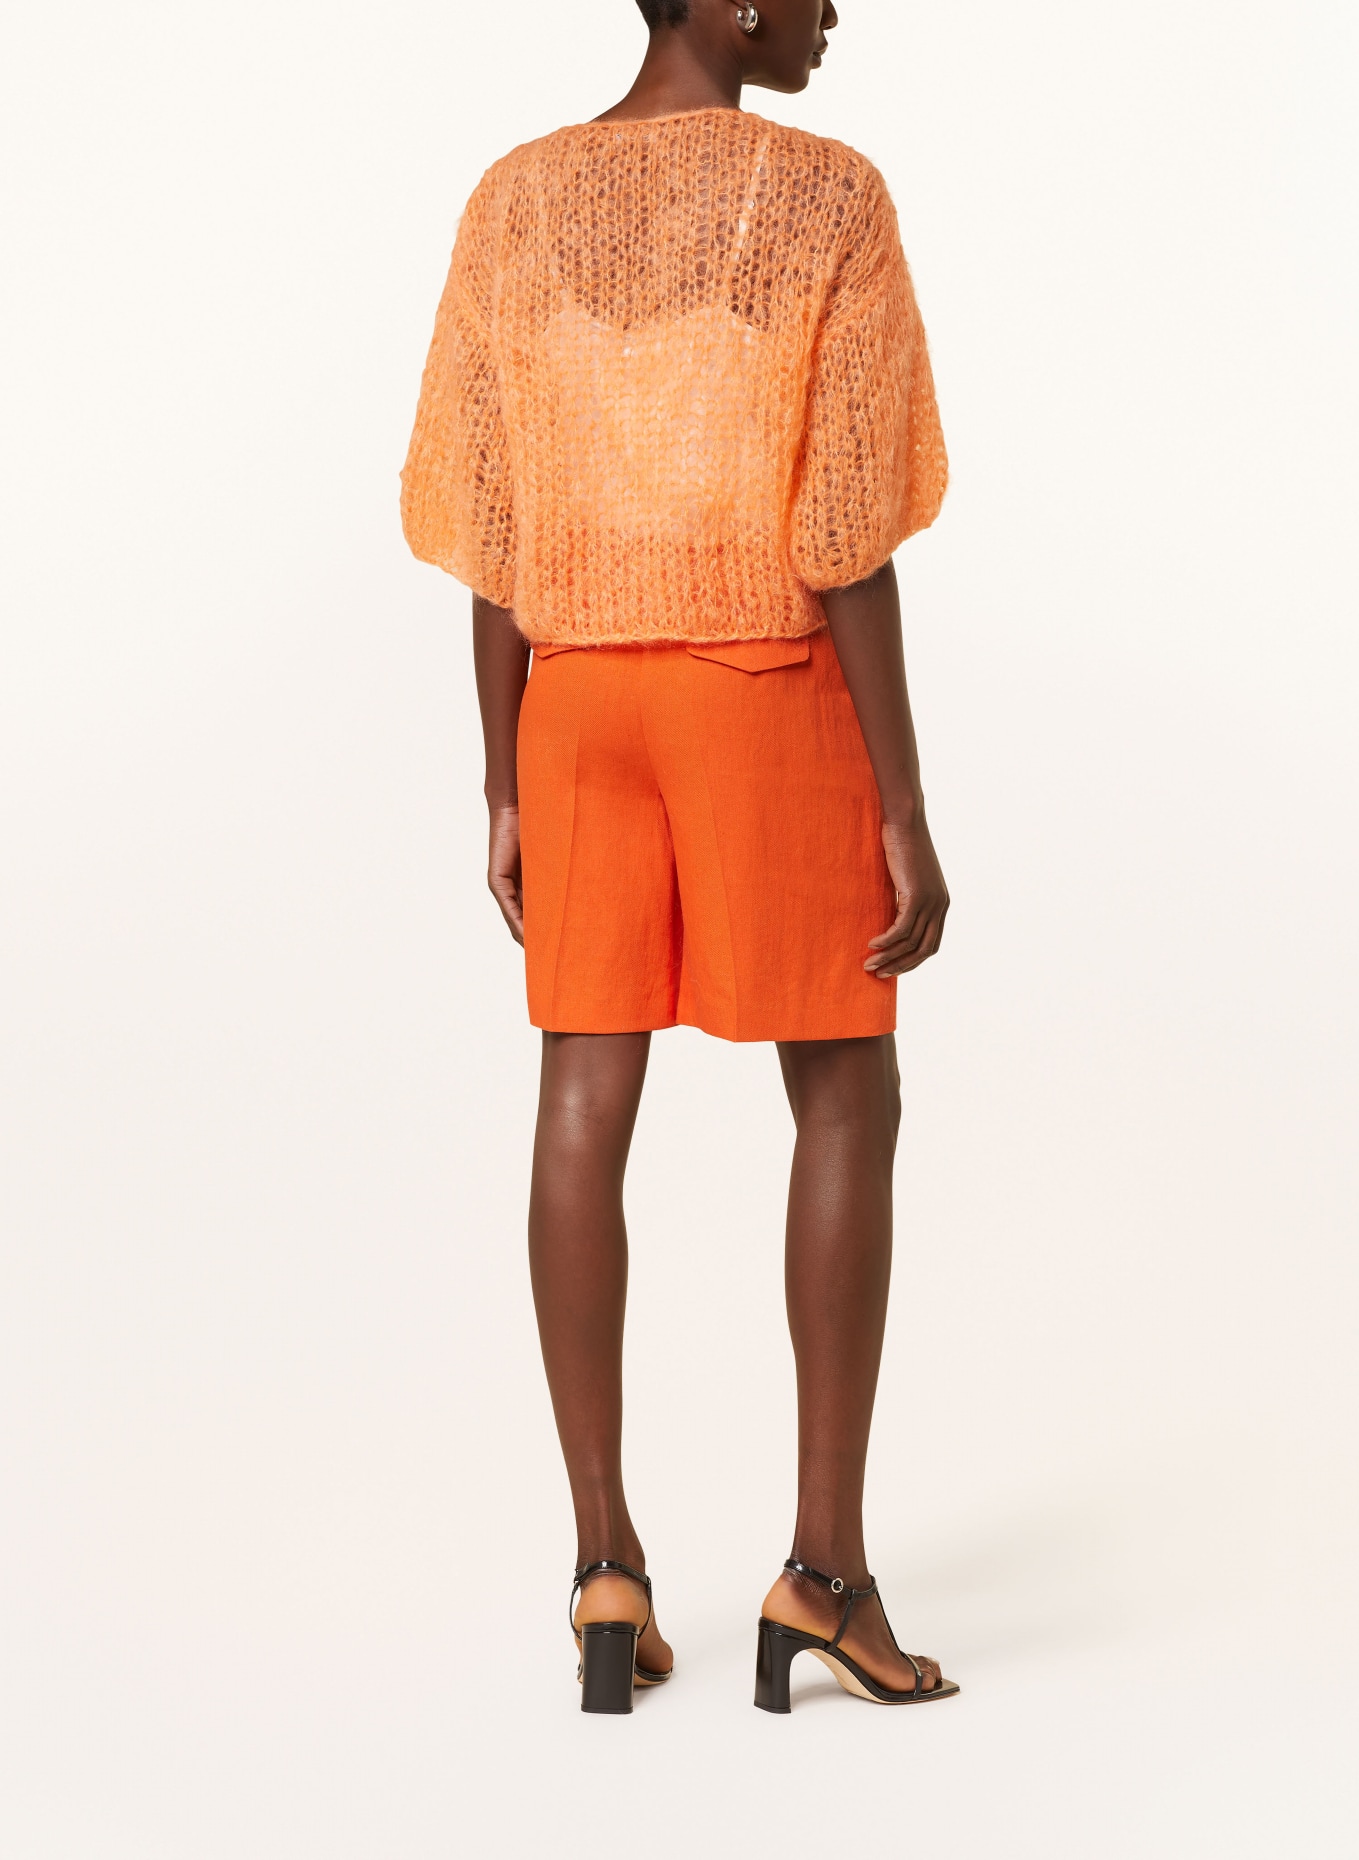 MAIAMI Mohair-Pullover mit 3/4-Arm, Farbe: ORANGE (Bild 3)